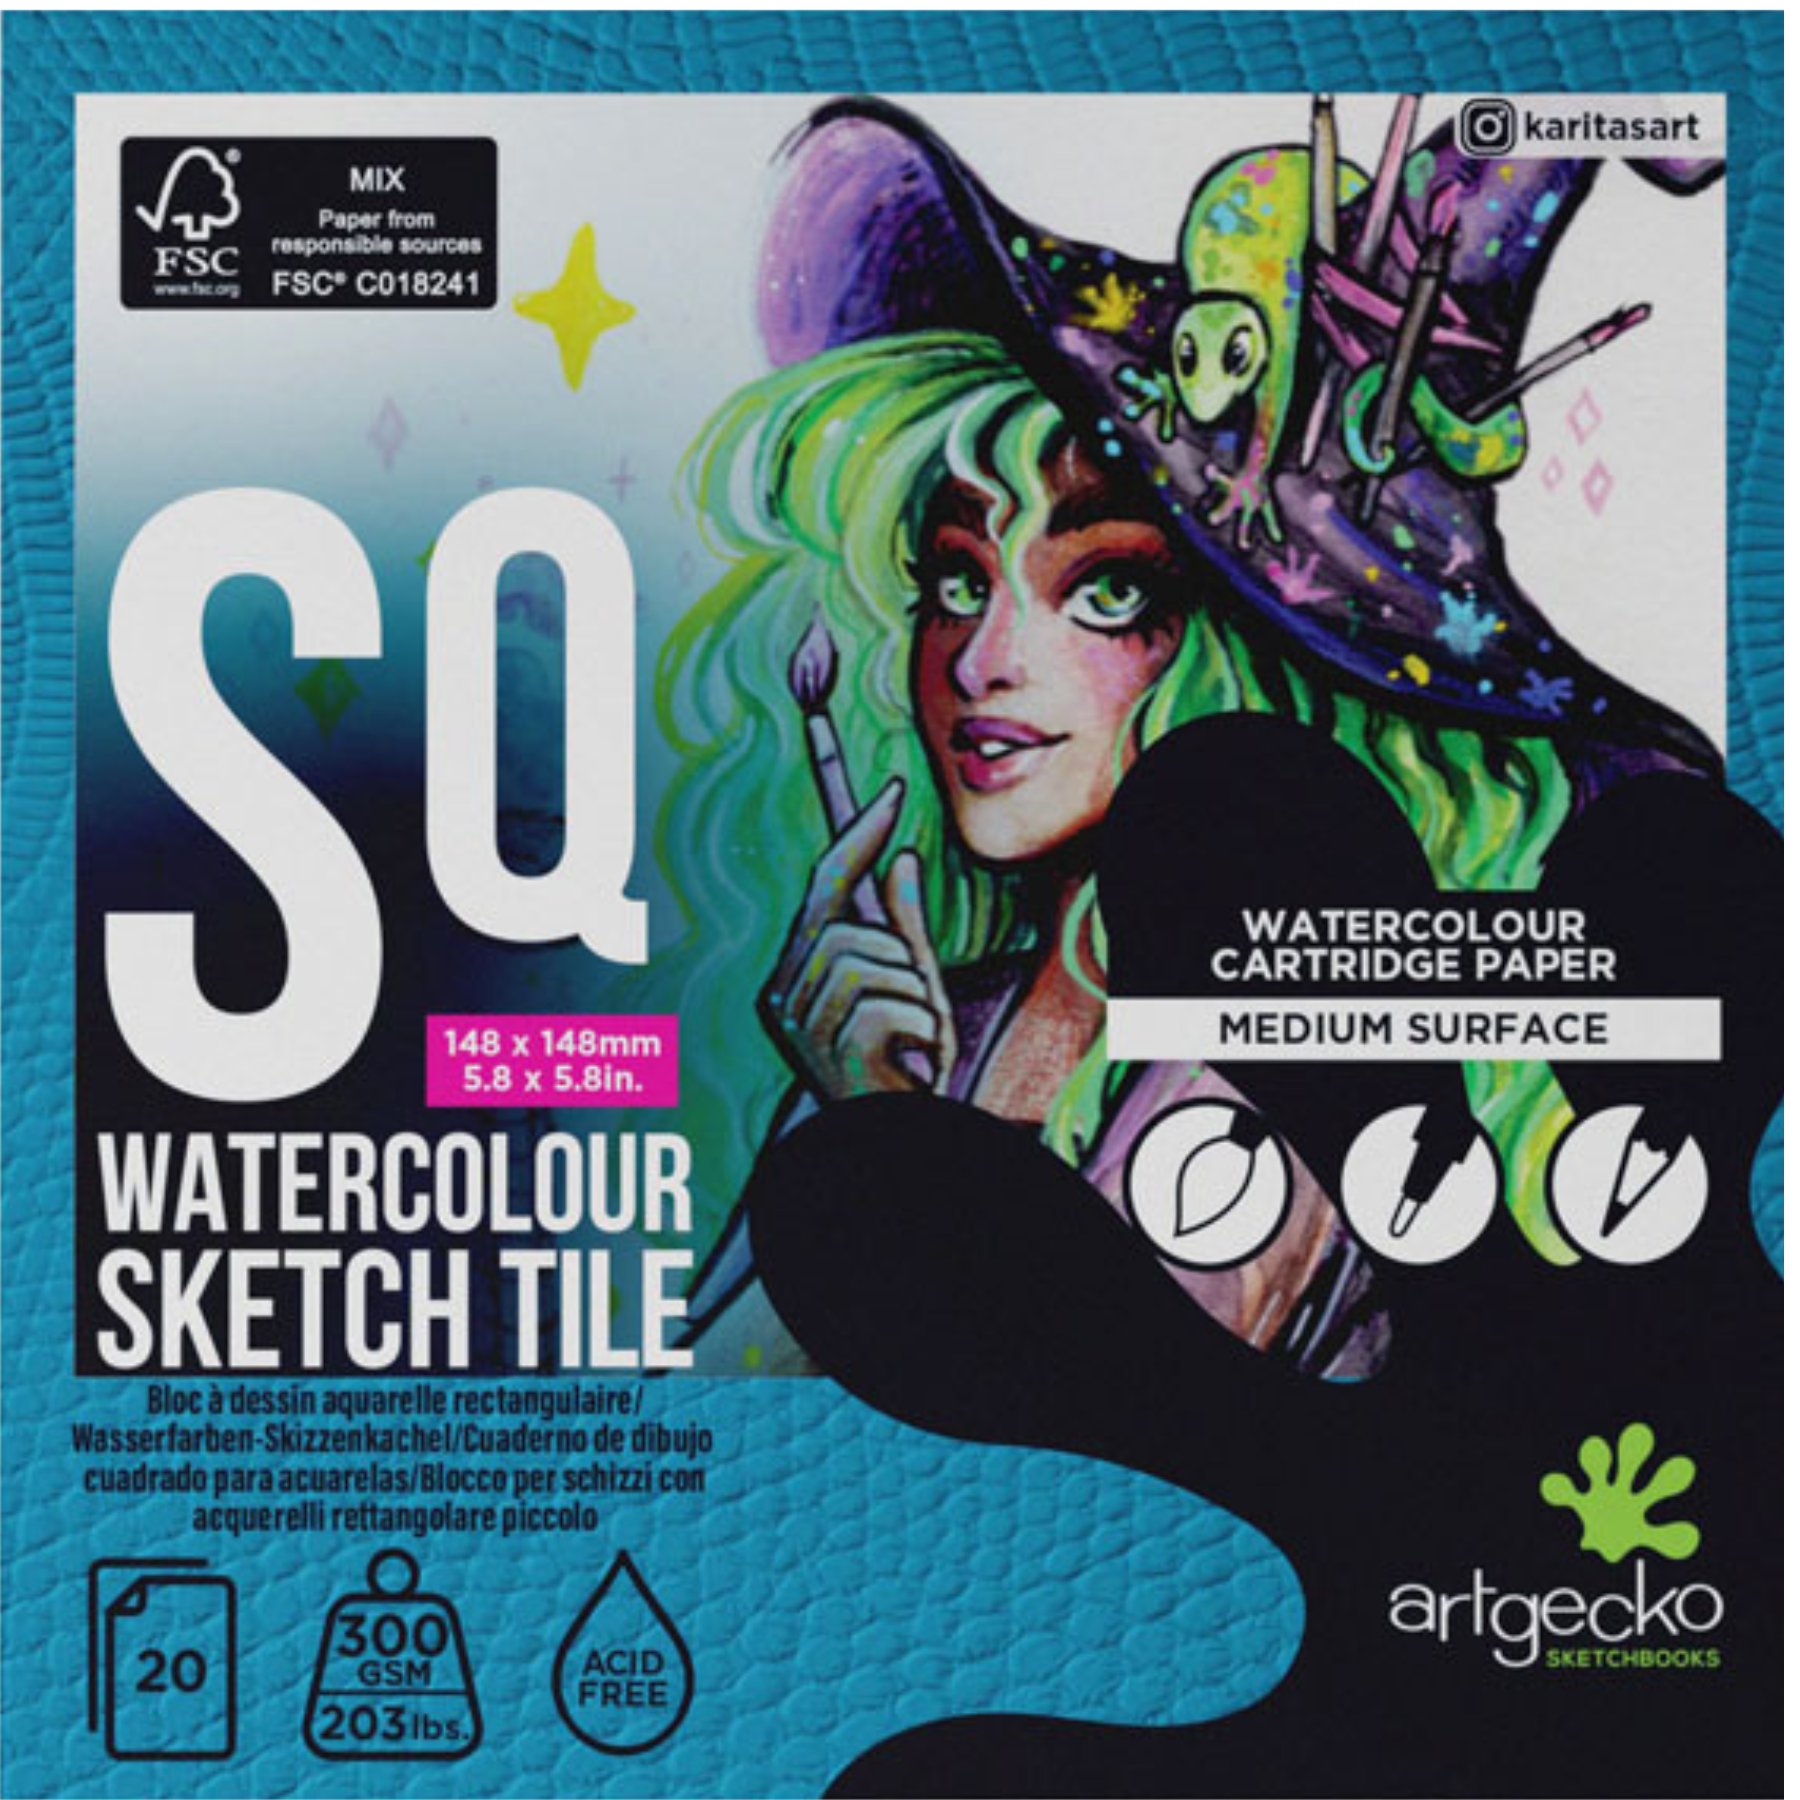 ArtGecko Watercolour Sketch Pad Square 148x148mm 20 Sheets 300gsm White Paper